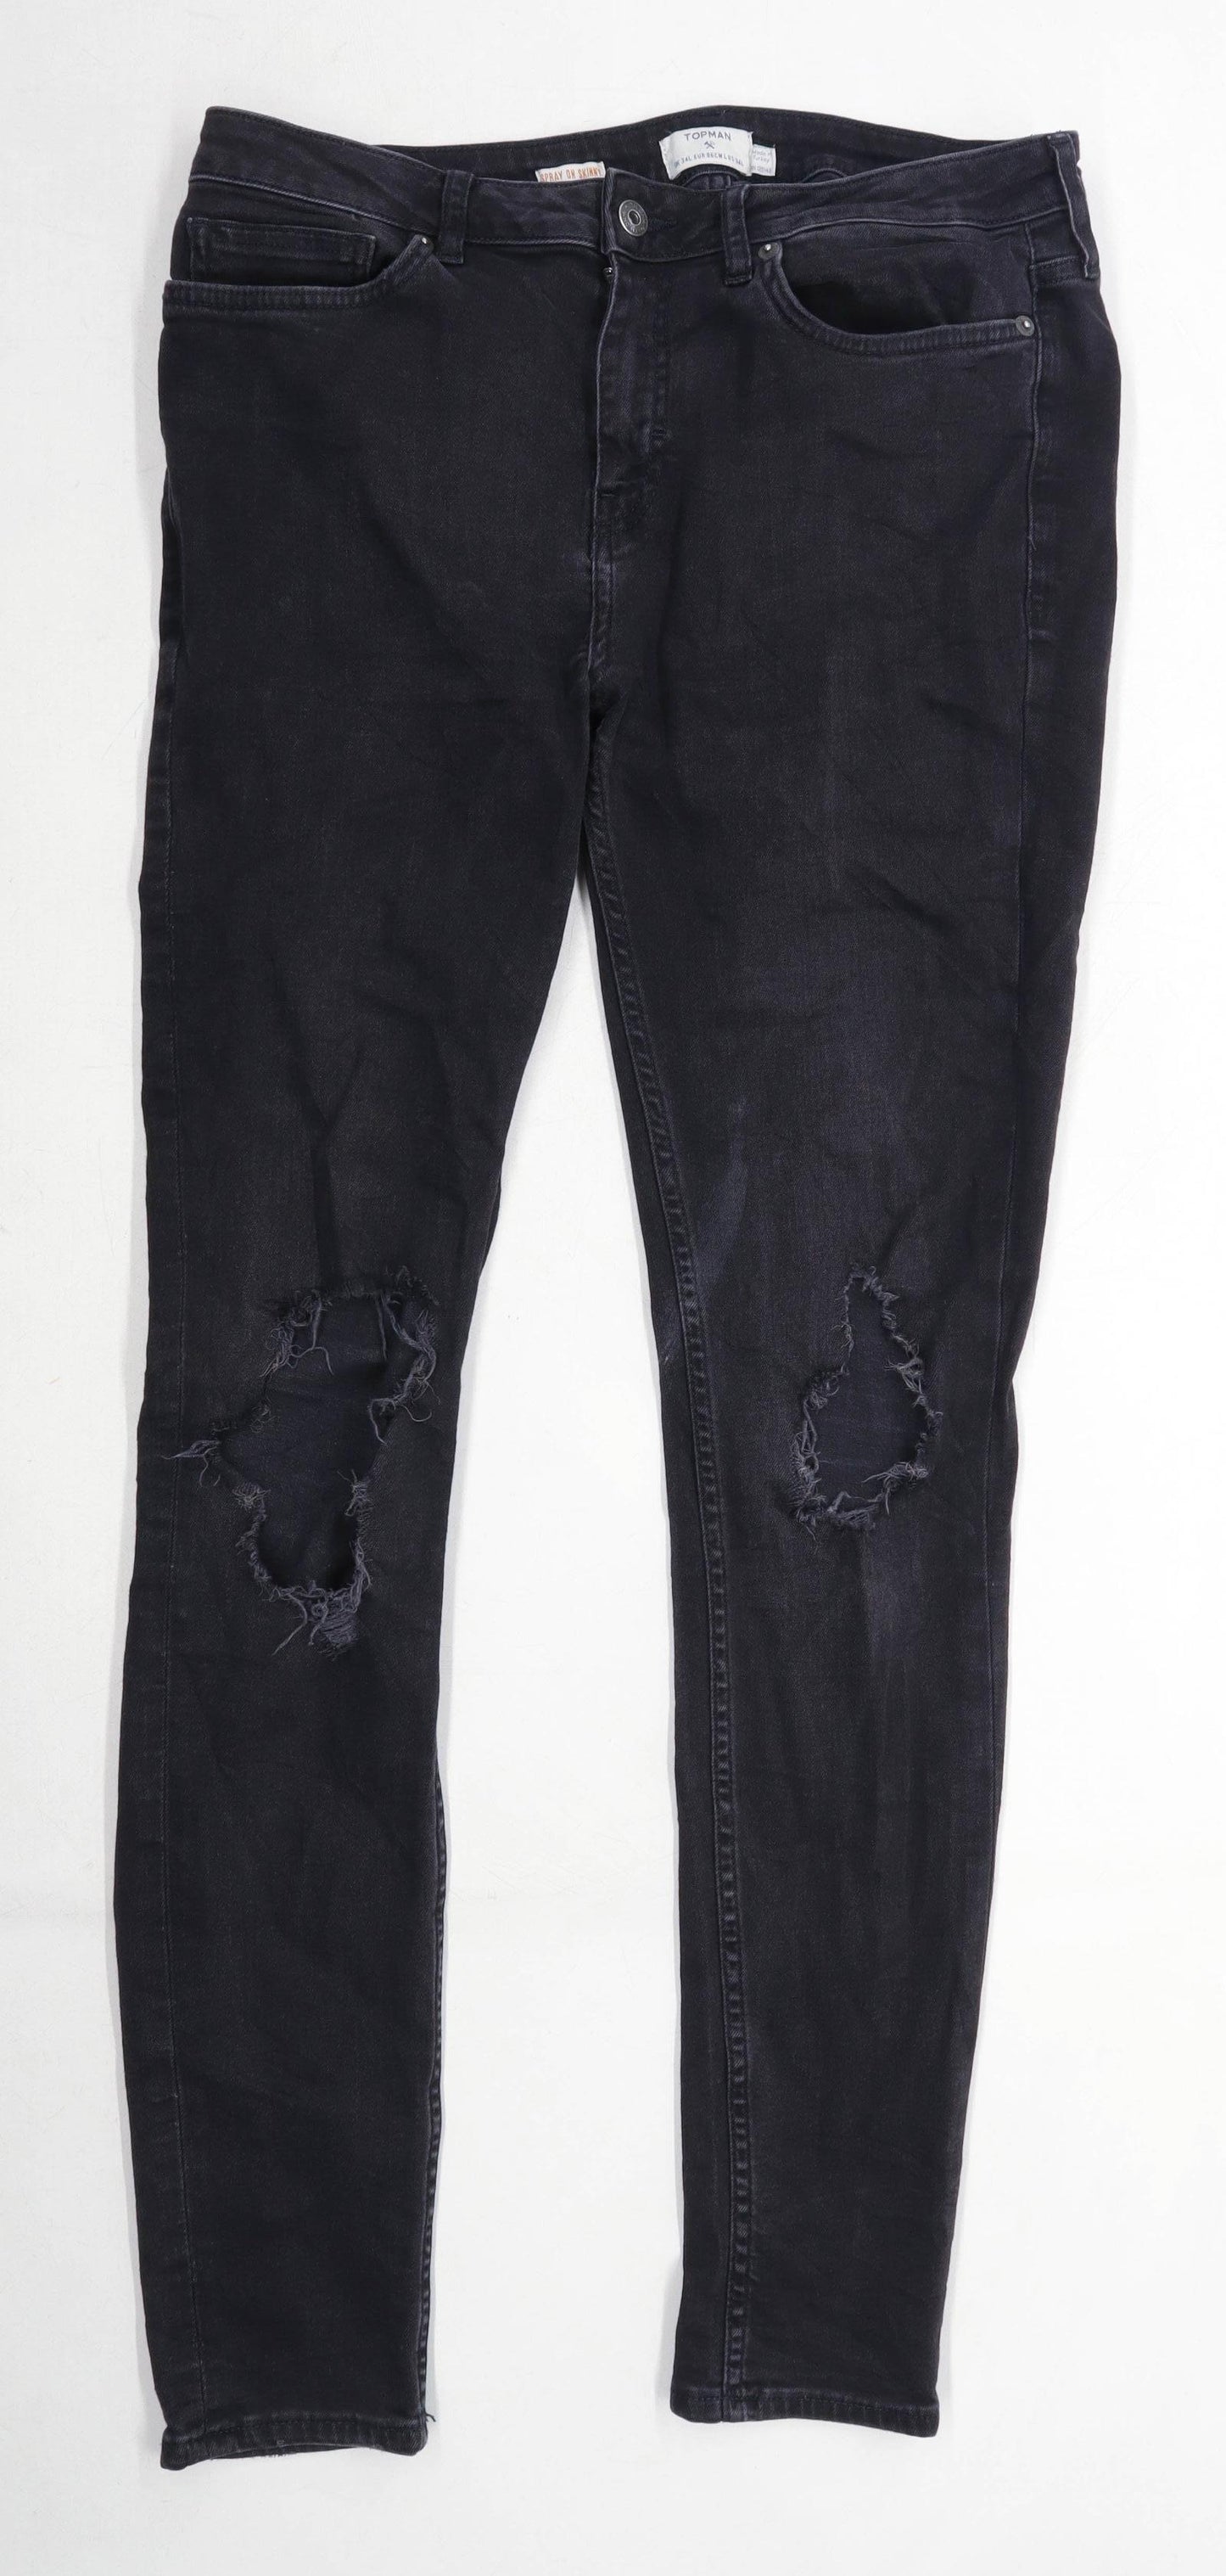 Topman Mens Black Ripped Denim Jeans Size W34/L32